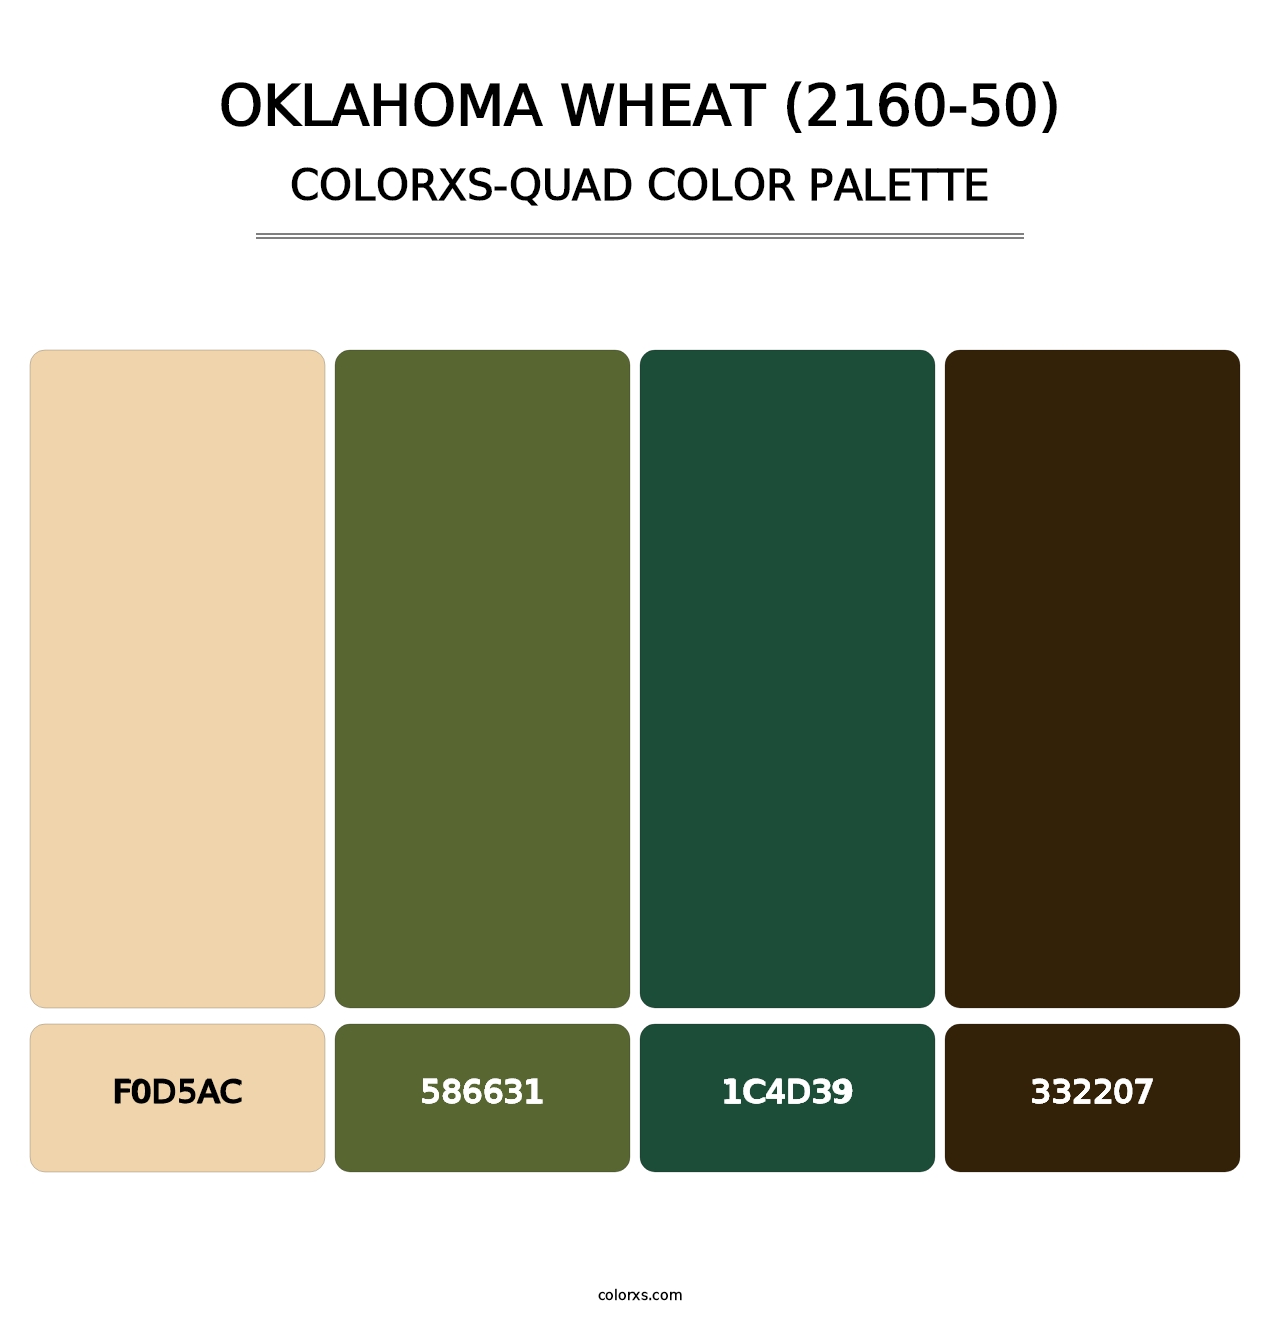 Oklahoma Wheat (2160-50) - Colorxs Quad Palette